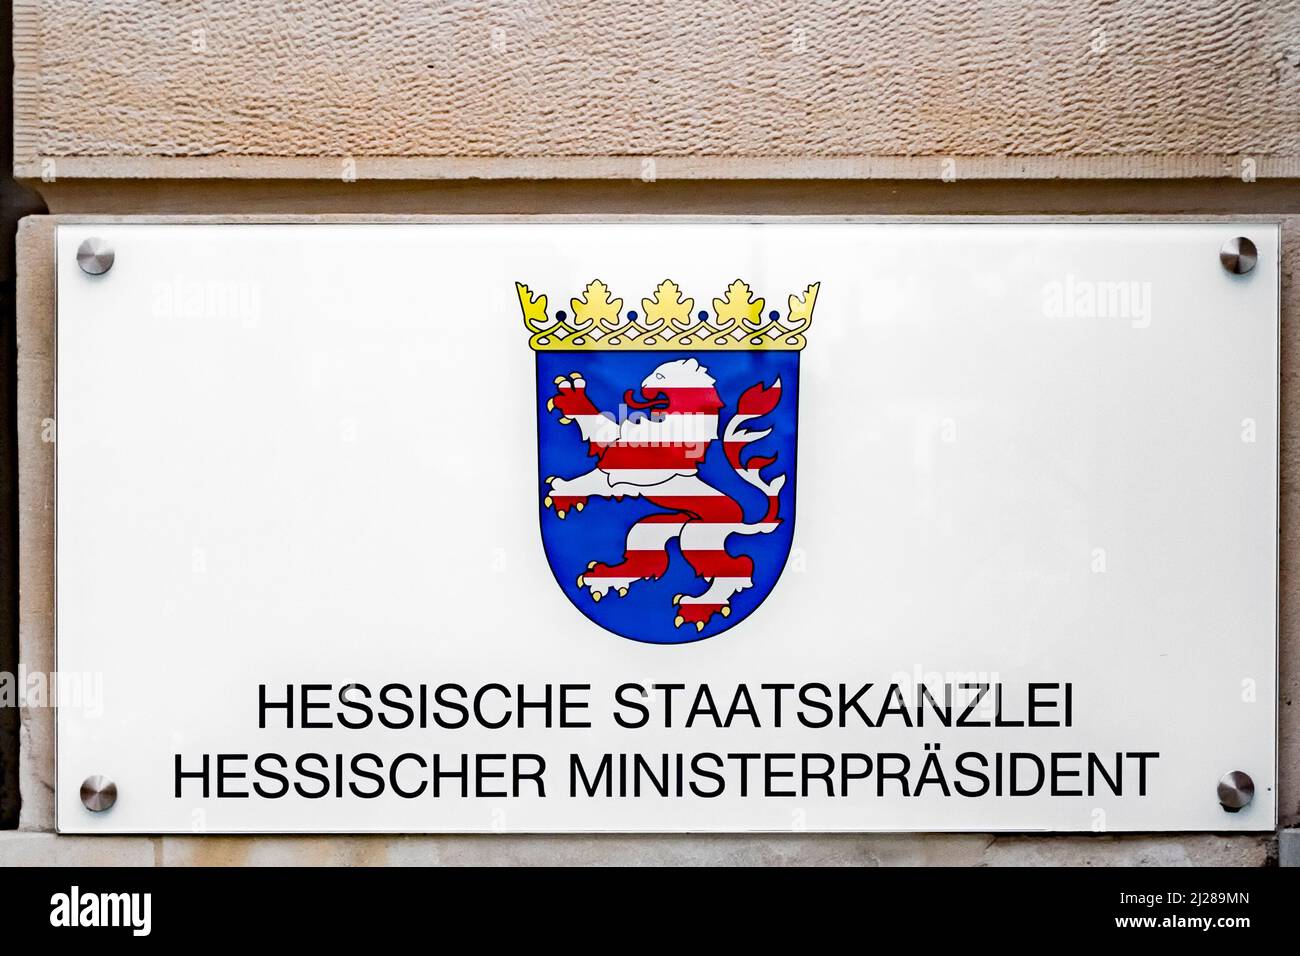 Wiesbaden, Germania - 8 dicembre 2020: Segnaletica Hessische Staatskanzlei Hessischer Ministerpräsident - italiano: cancelleria di stato Hesse Cancellor - AT Foto Stock